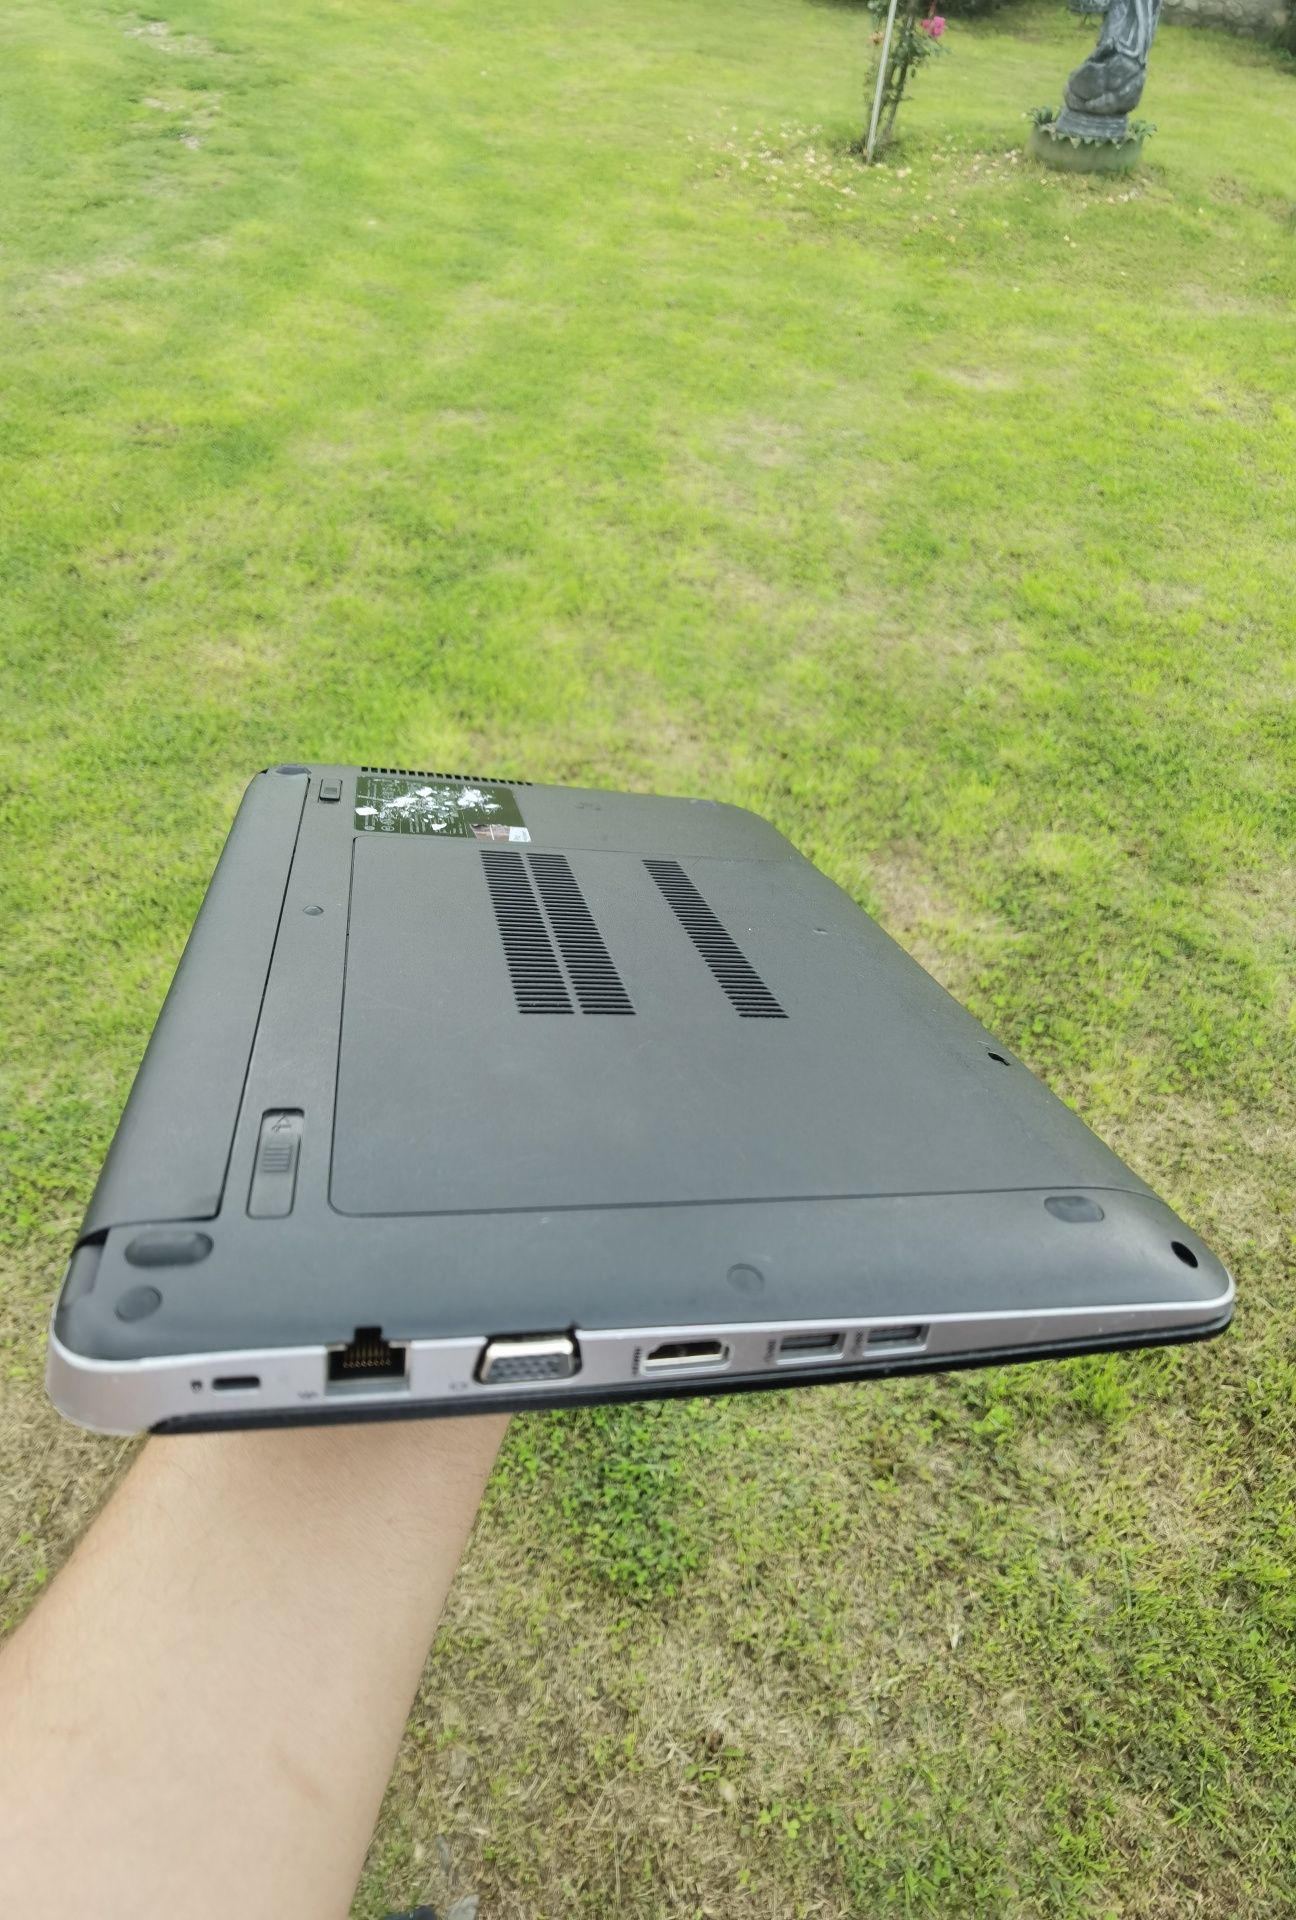 Laptop Hp ProBook 440 G3